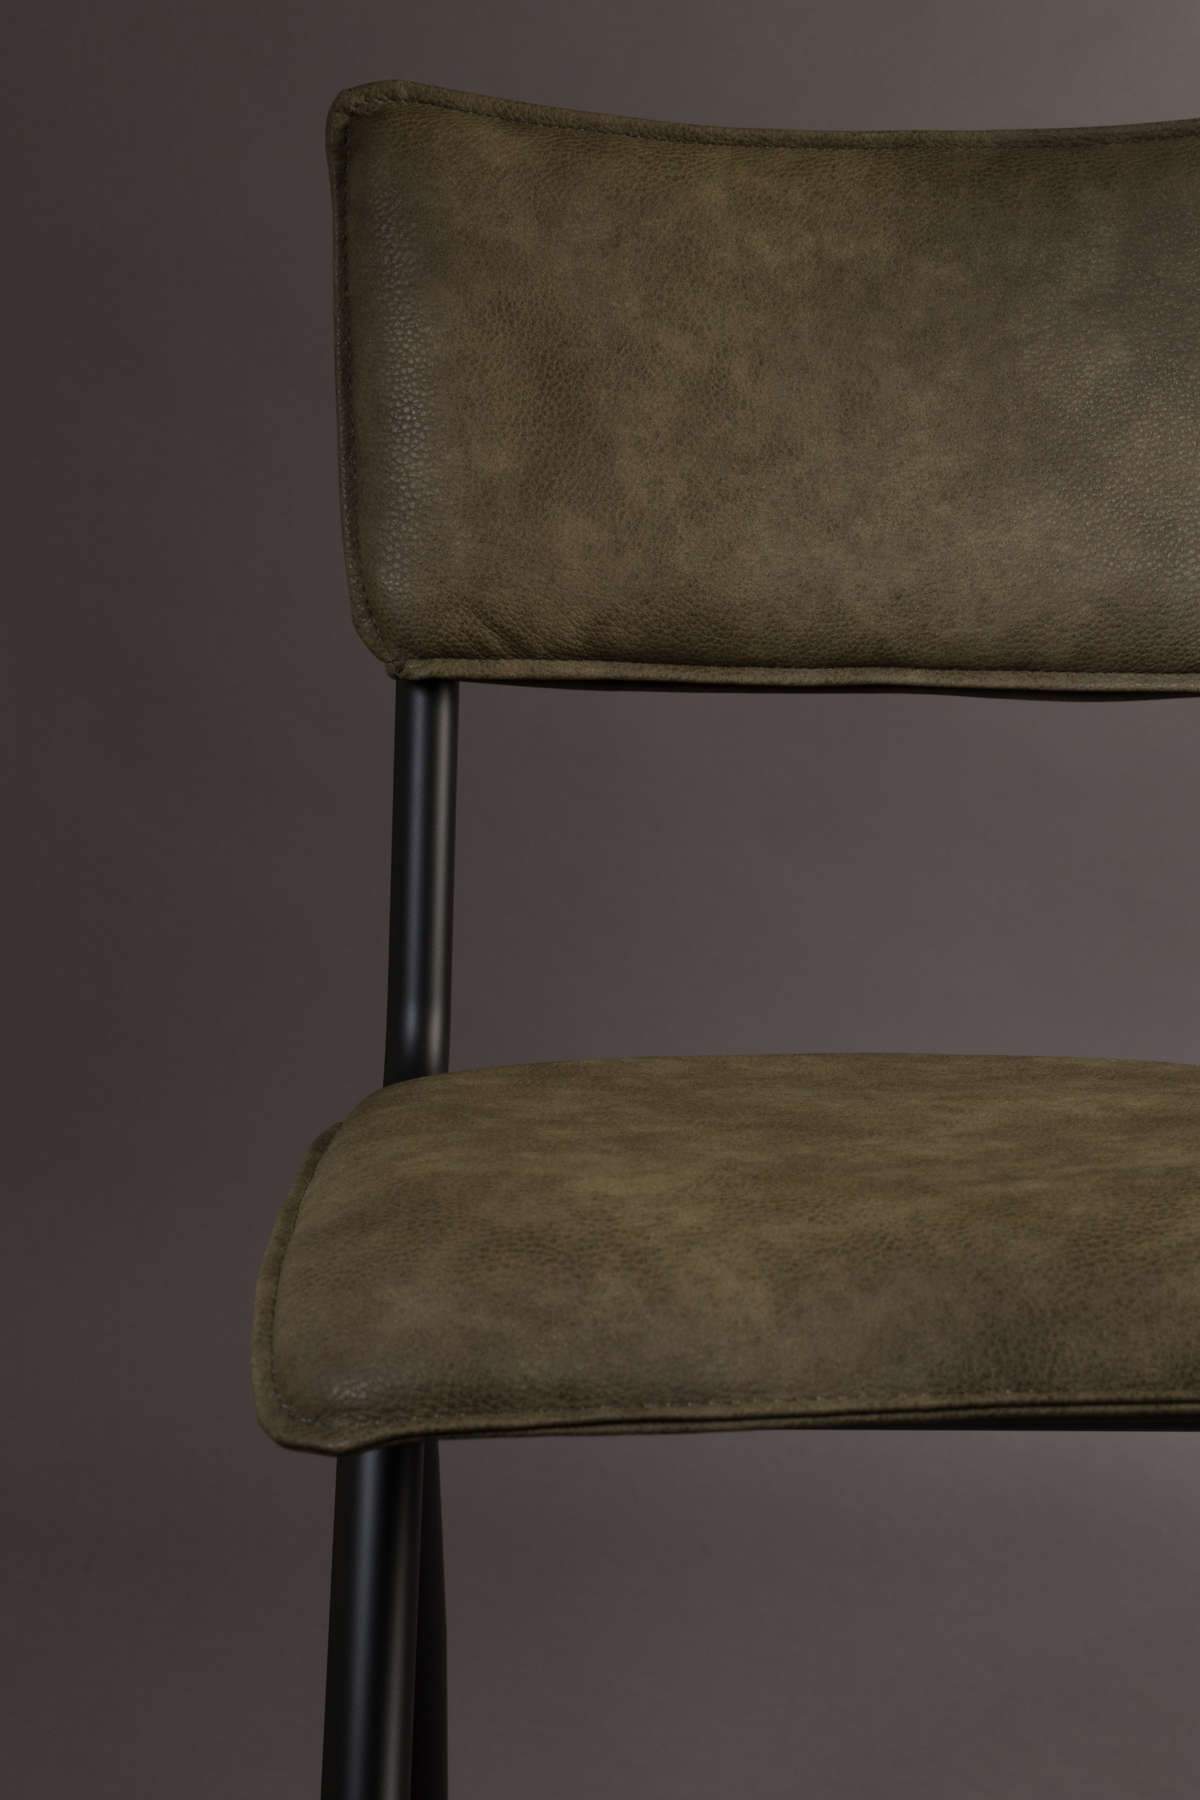 WILLOW chair eco leather green, Dutchbone, Eye on Design